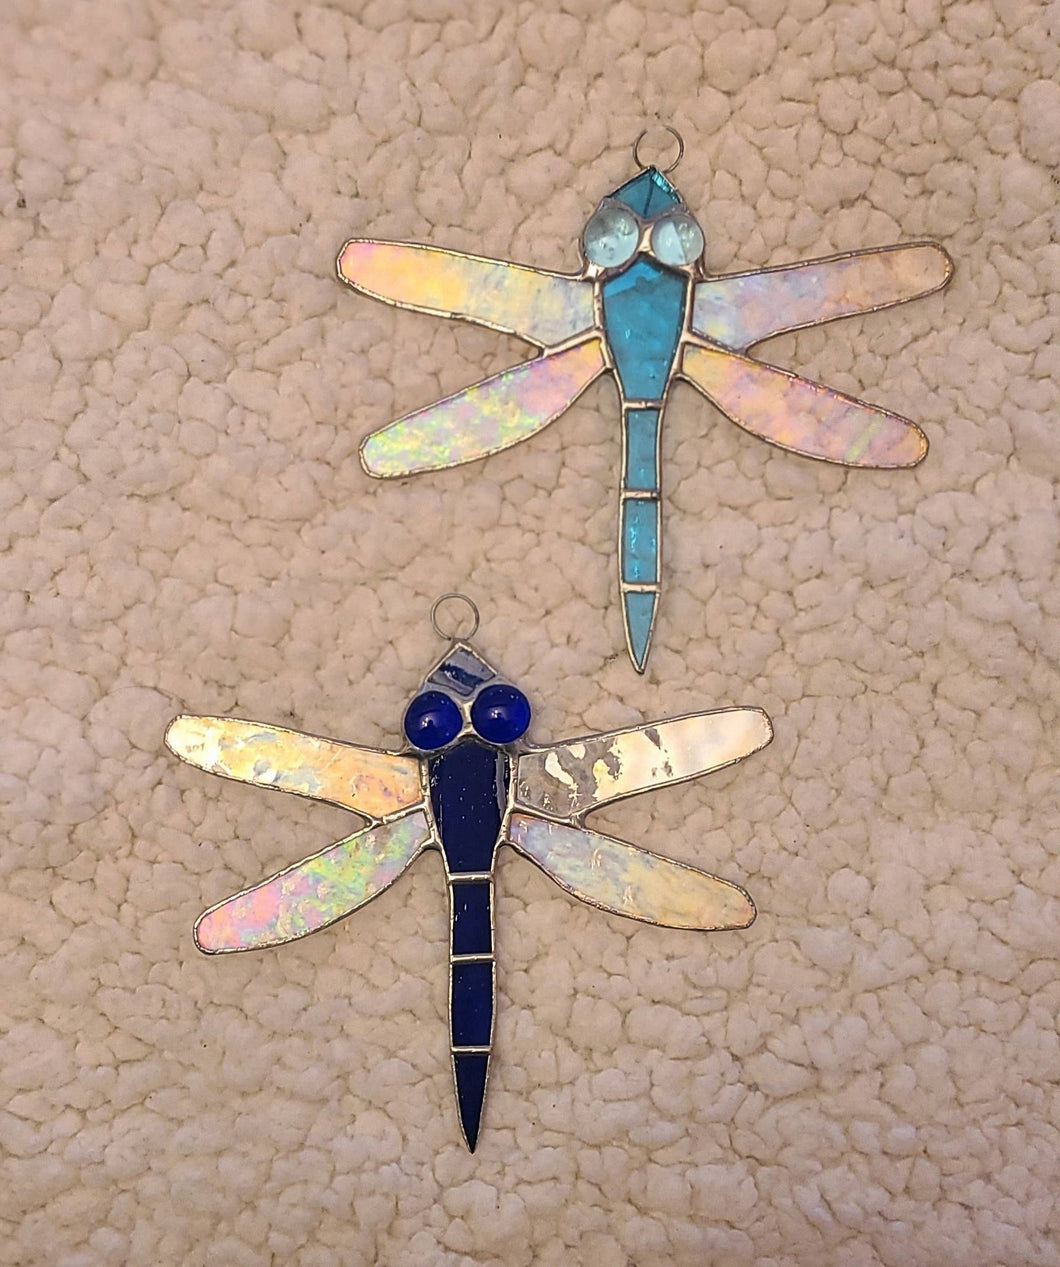 MGL653AB Med Ornaments, Windowpane glass dragonfly.